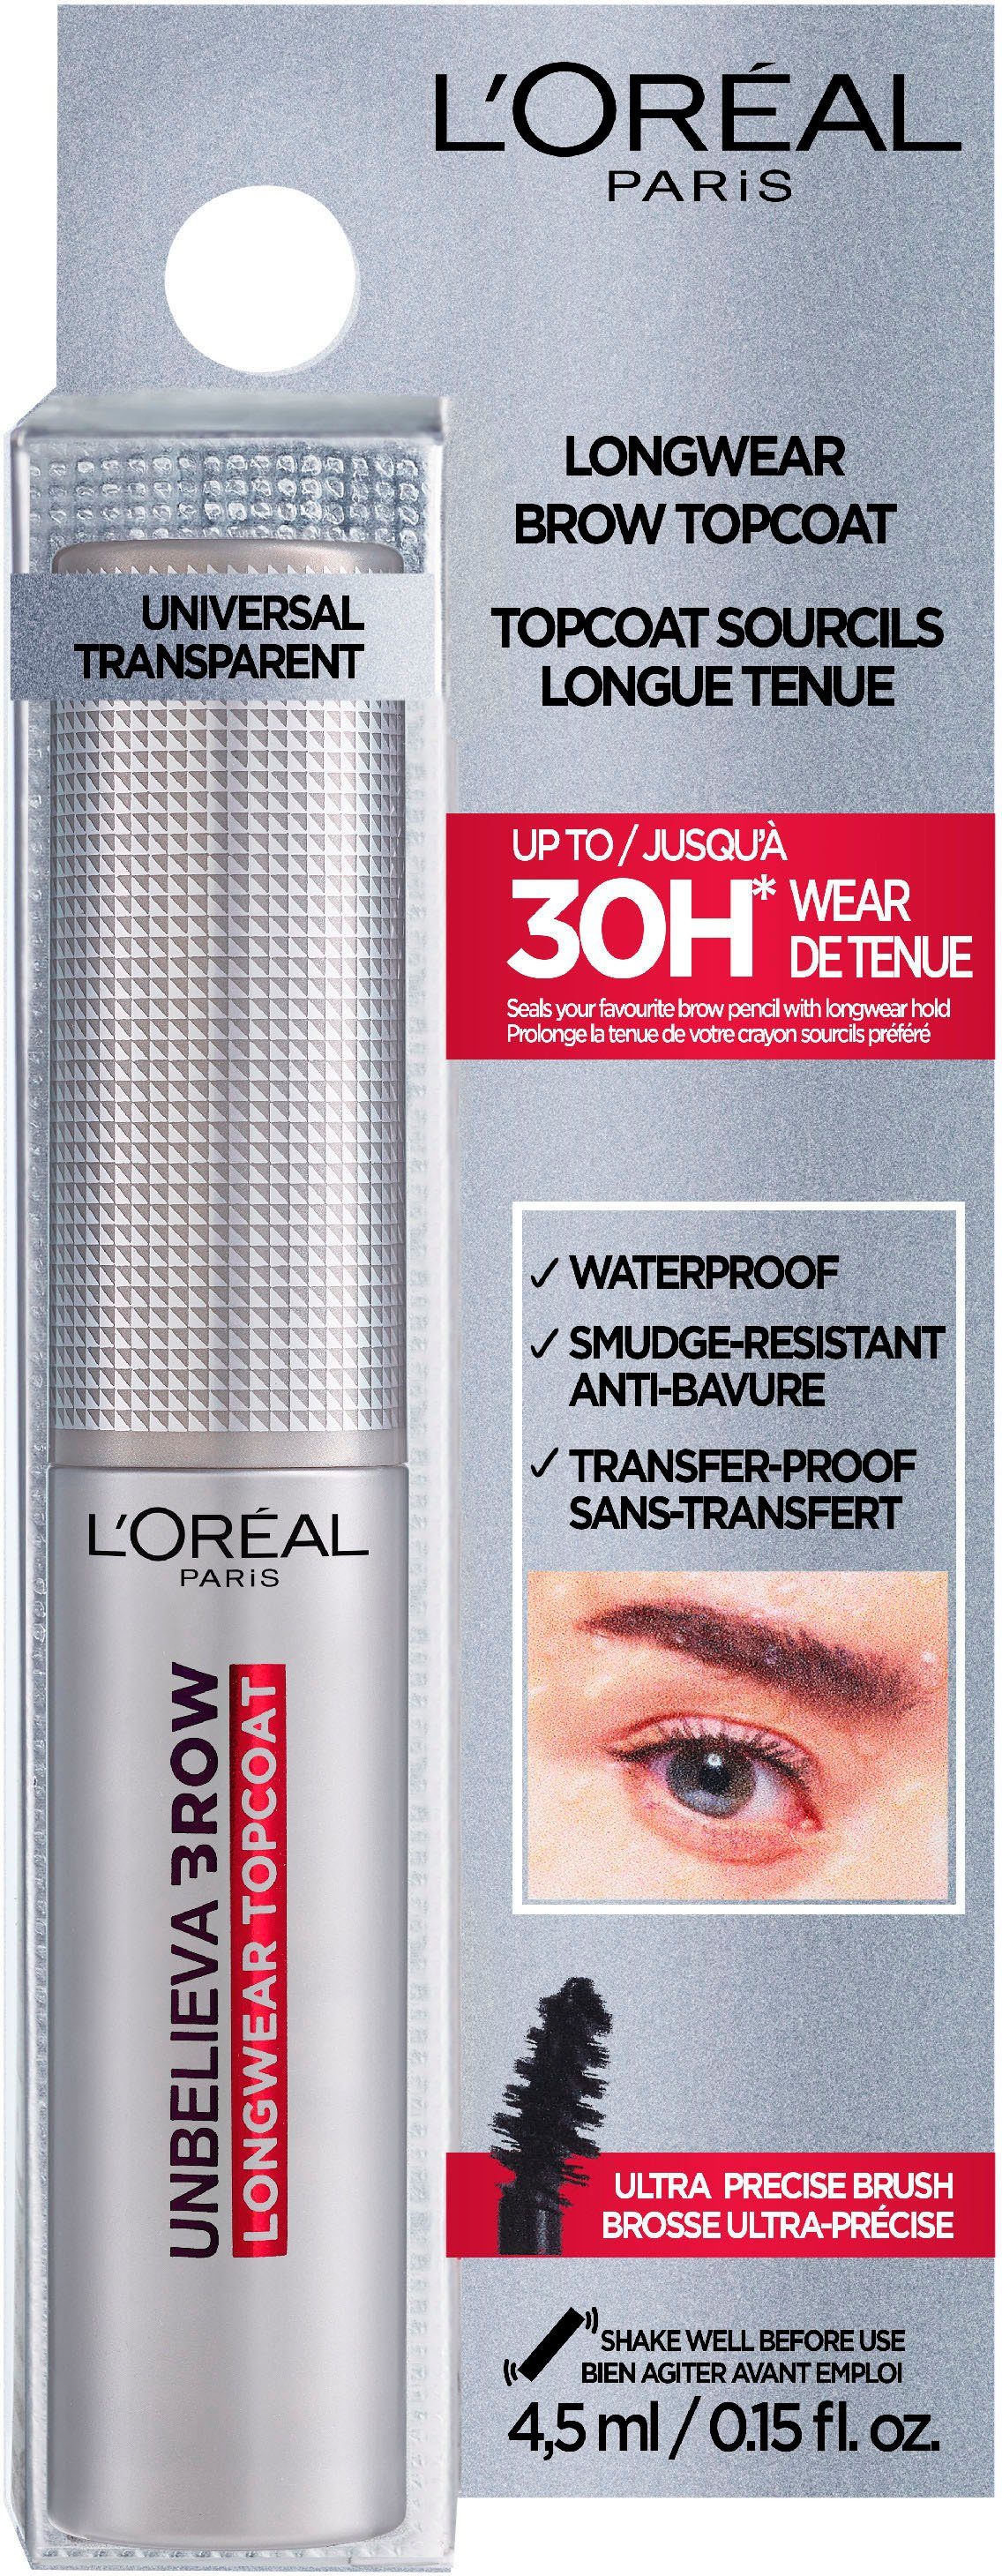 L'ORÉAL Longwear Unbelieva’Brow Augenbrauen-Kosmetika Topcoat, PARIS mit Mascara-Bürste, Augen-Make-Up präziser langanhaltend,